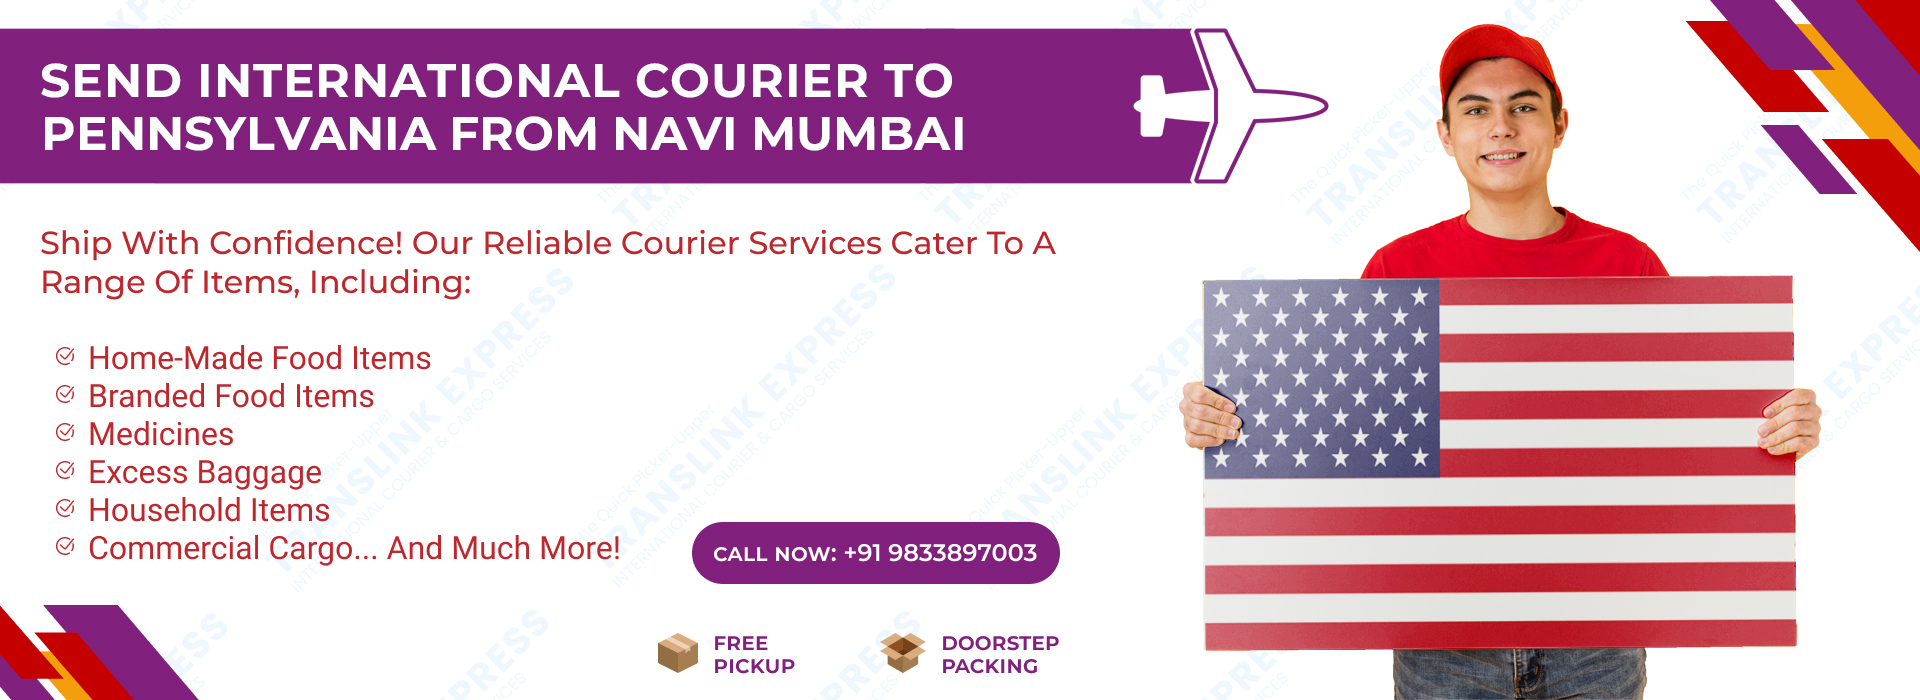 Courier to Pennsylvania From Navi Mumbai